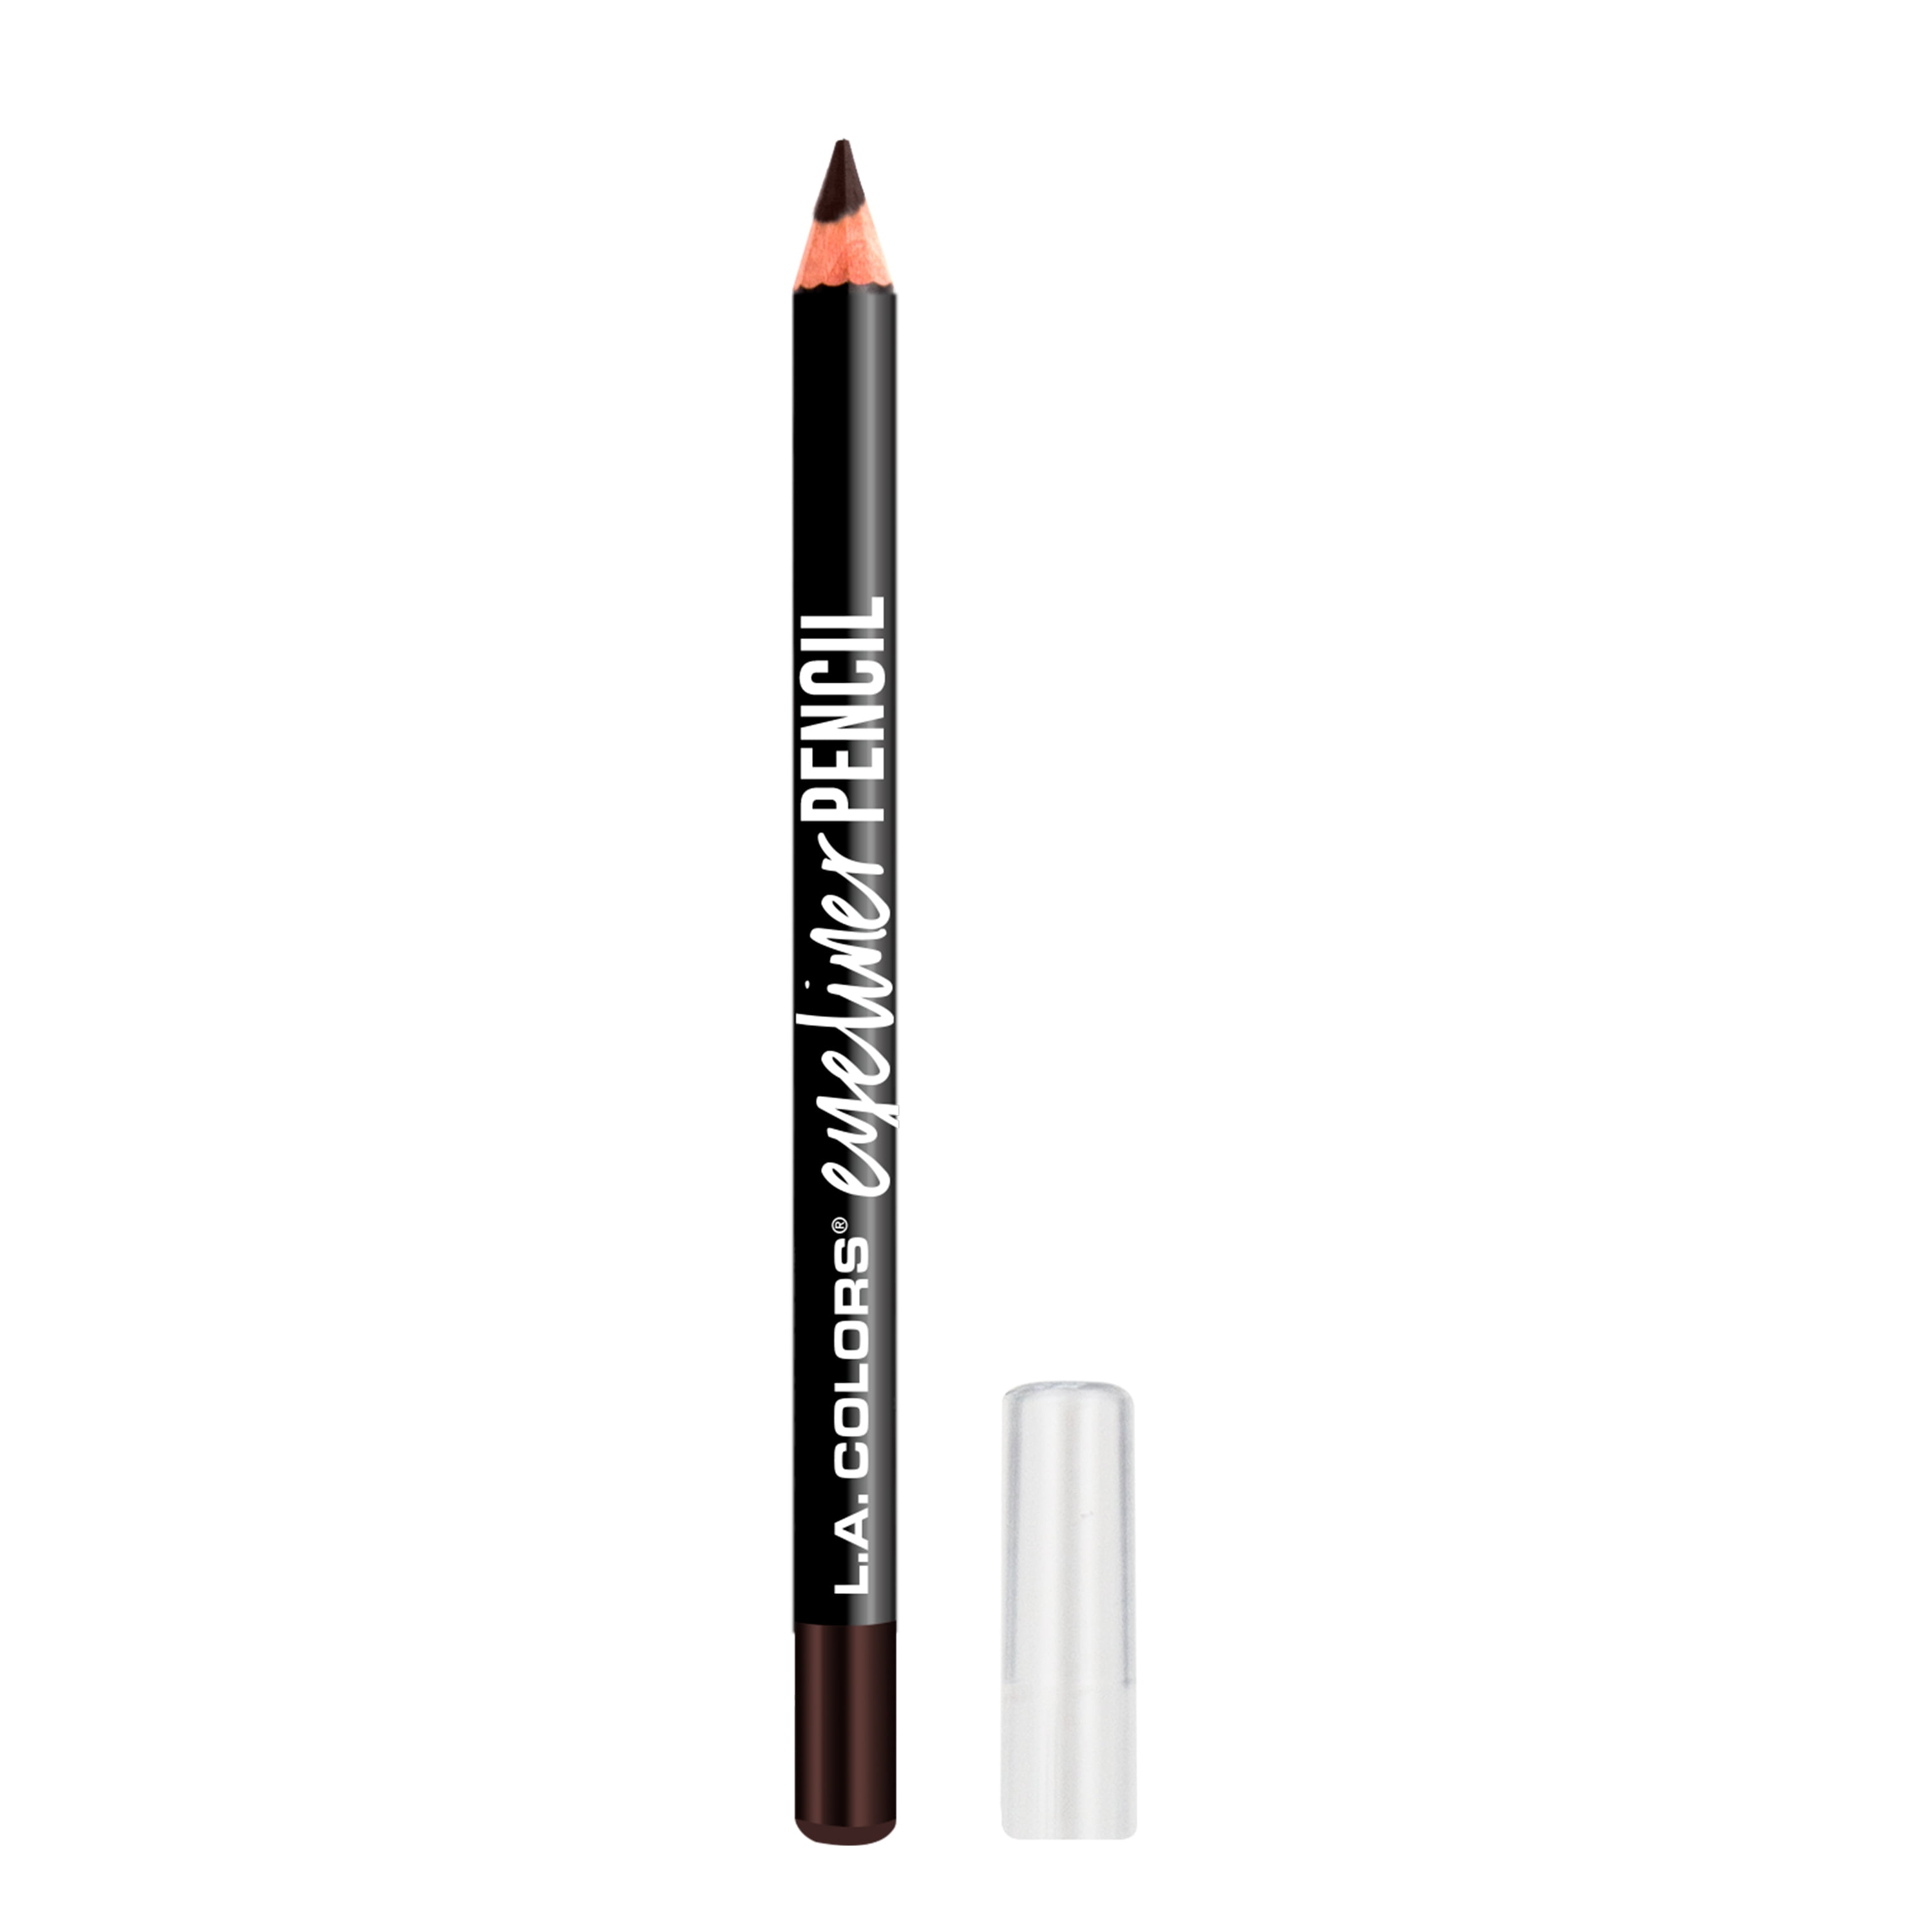 L.A. COLORS Eyeliner Pencil, Black Brown, 0.035 fl oz